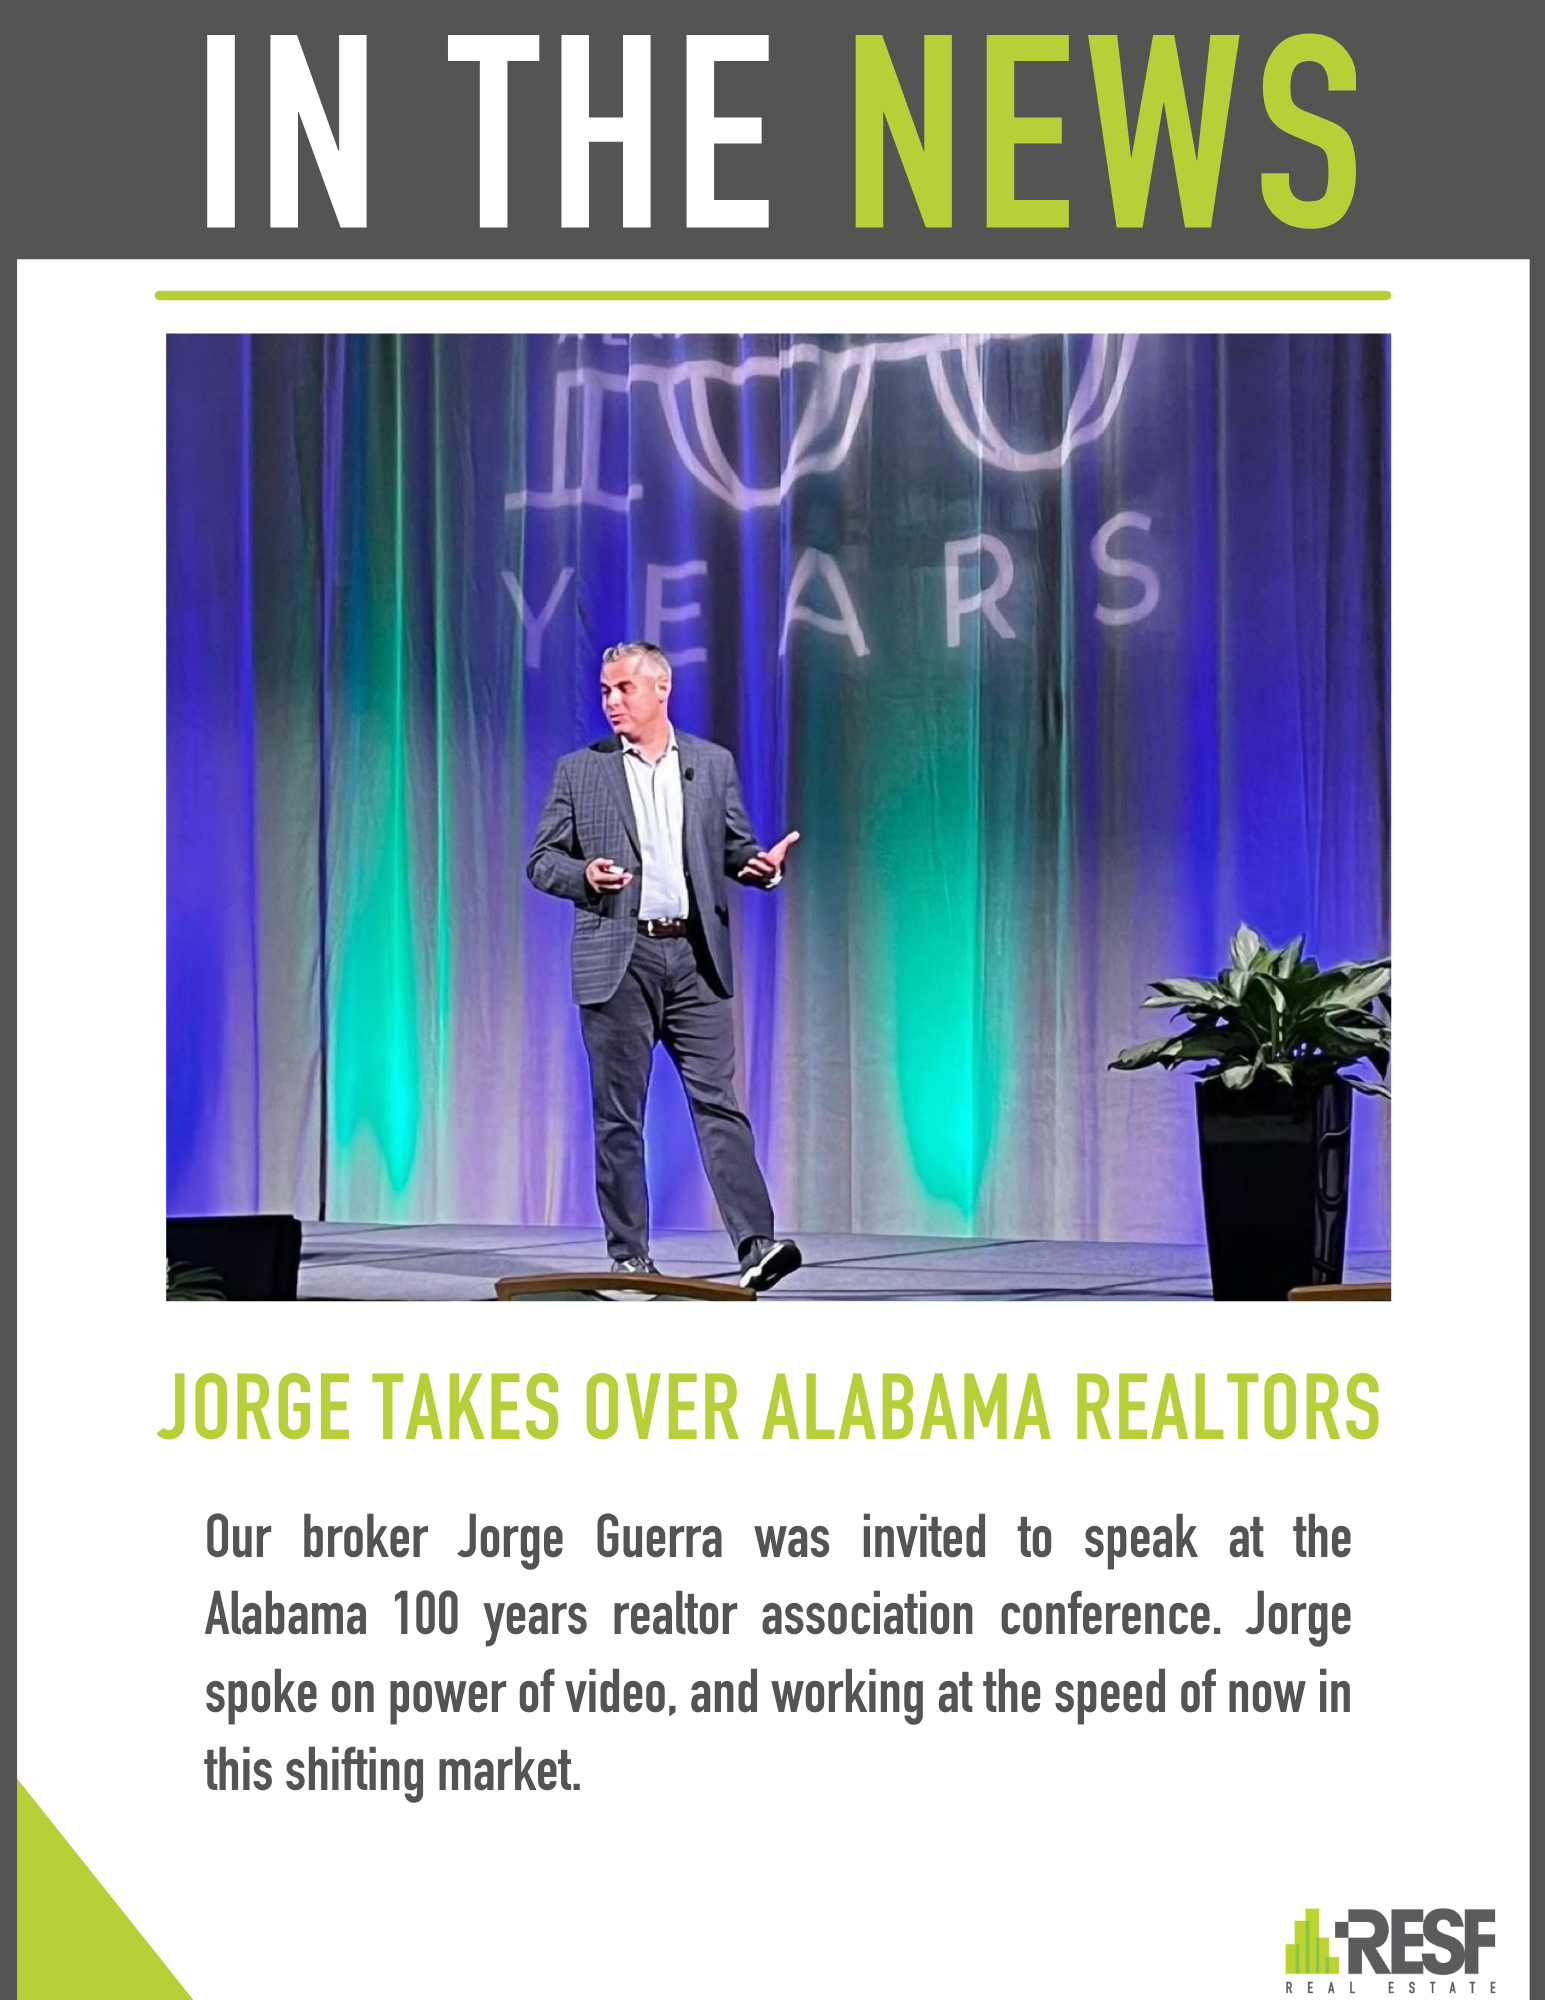 Jorge takes over Alabama Realtors